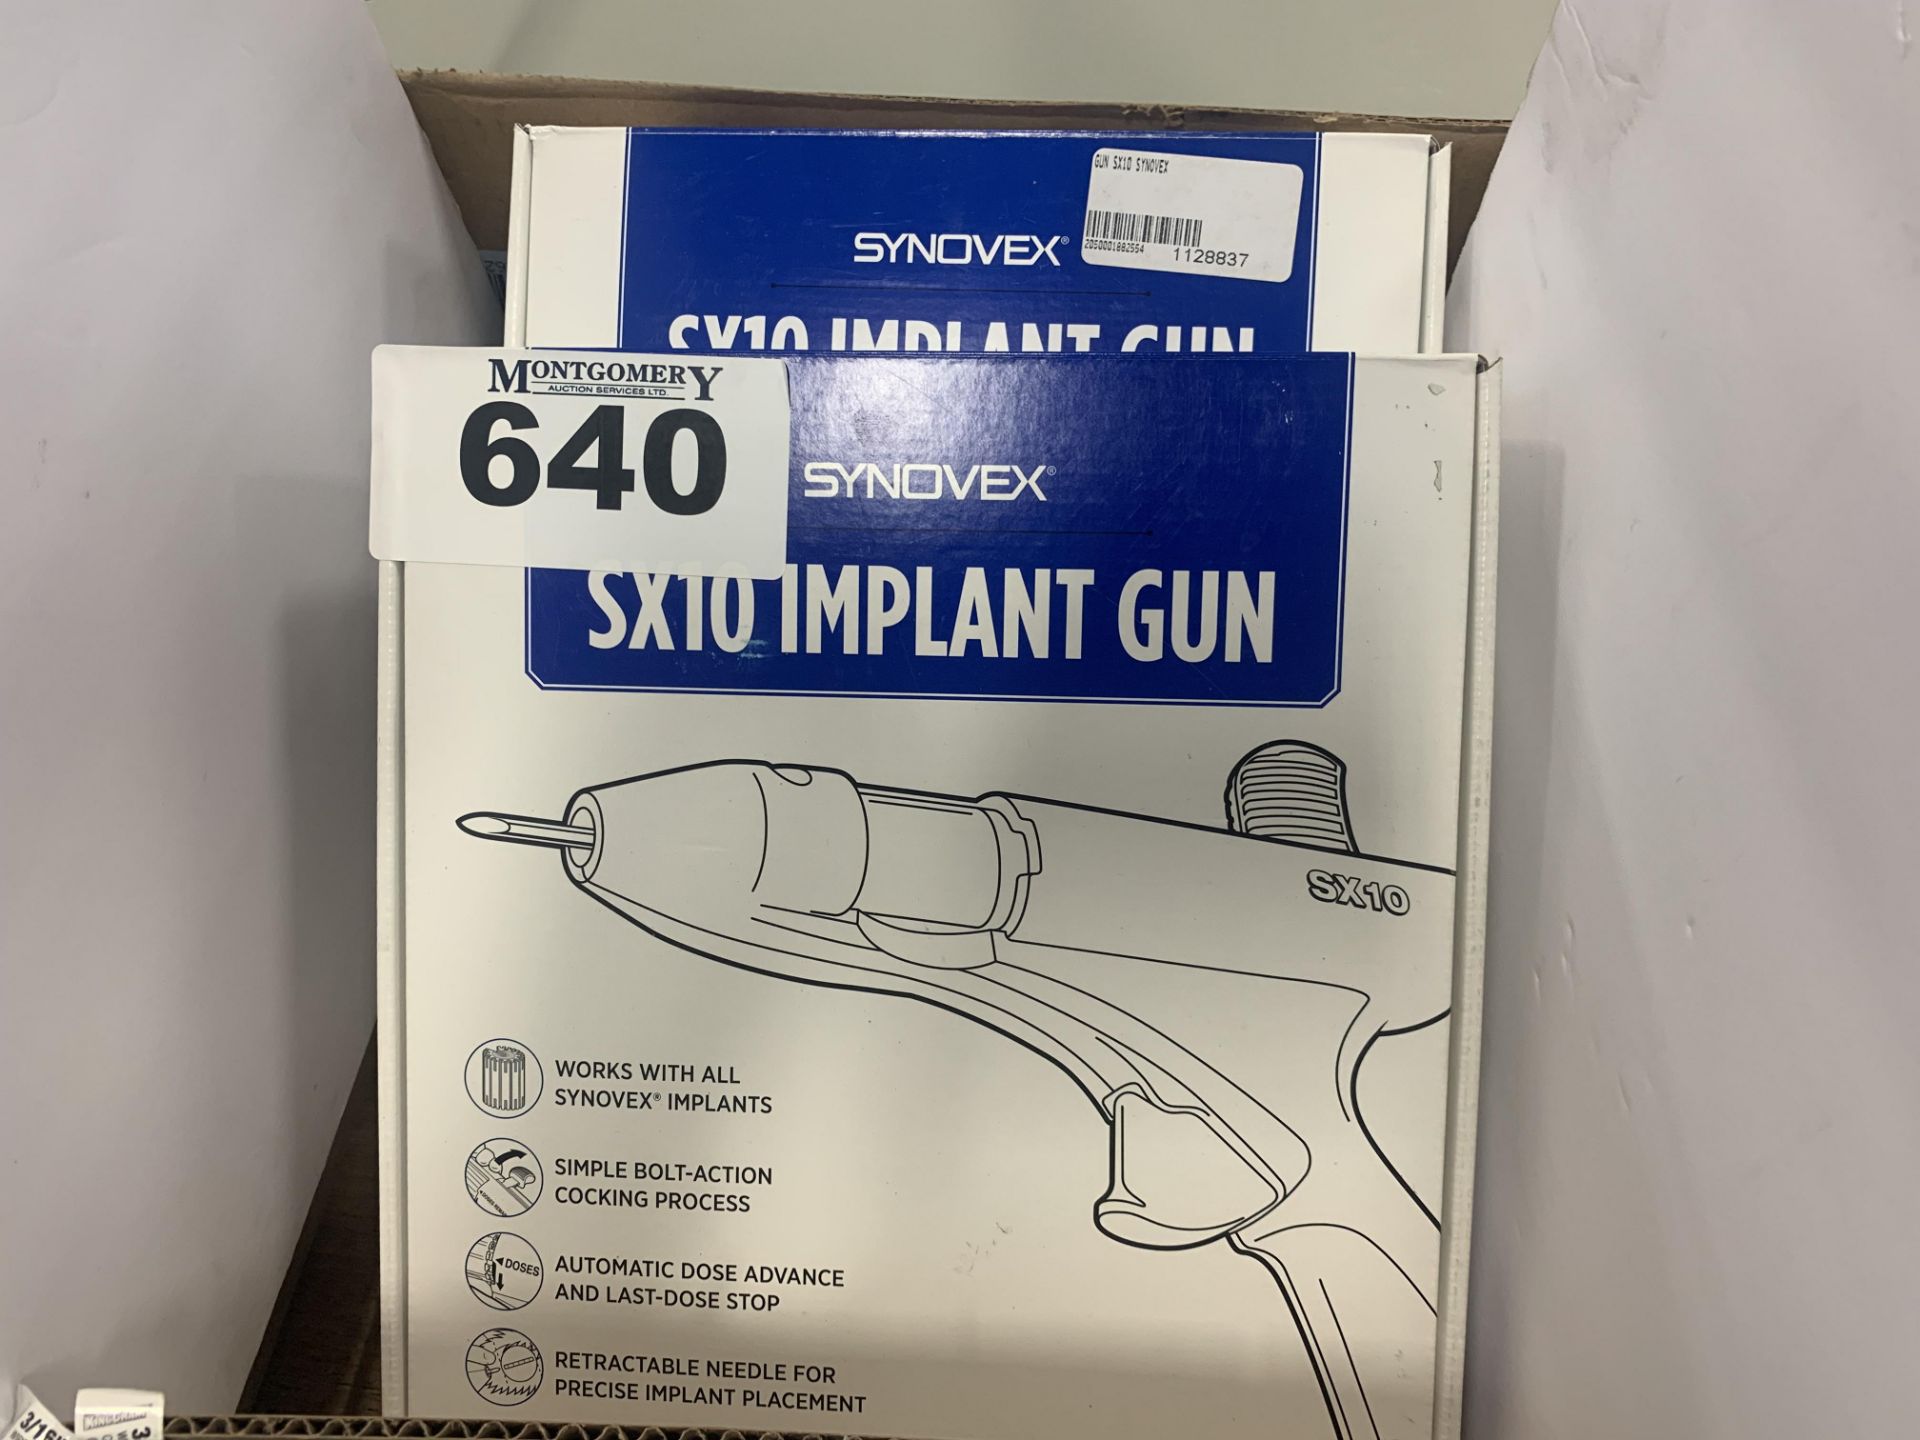 SYNOVEX SX10 IMPLANT GUN